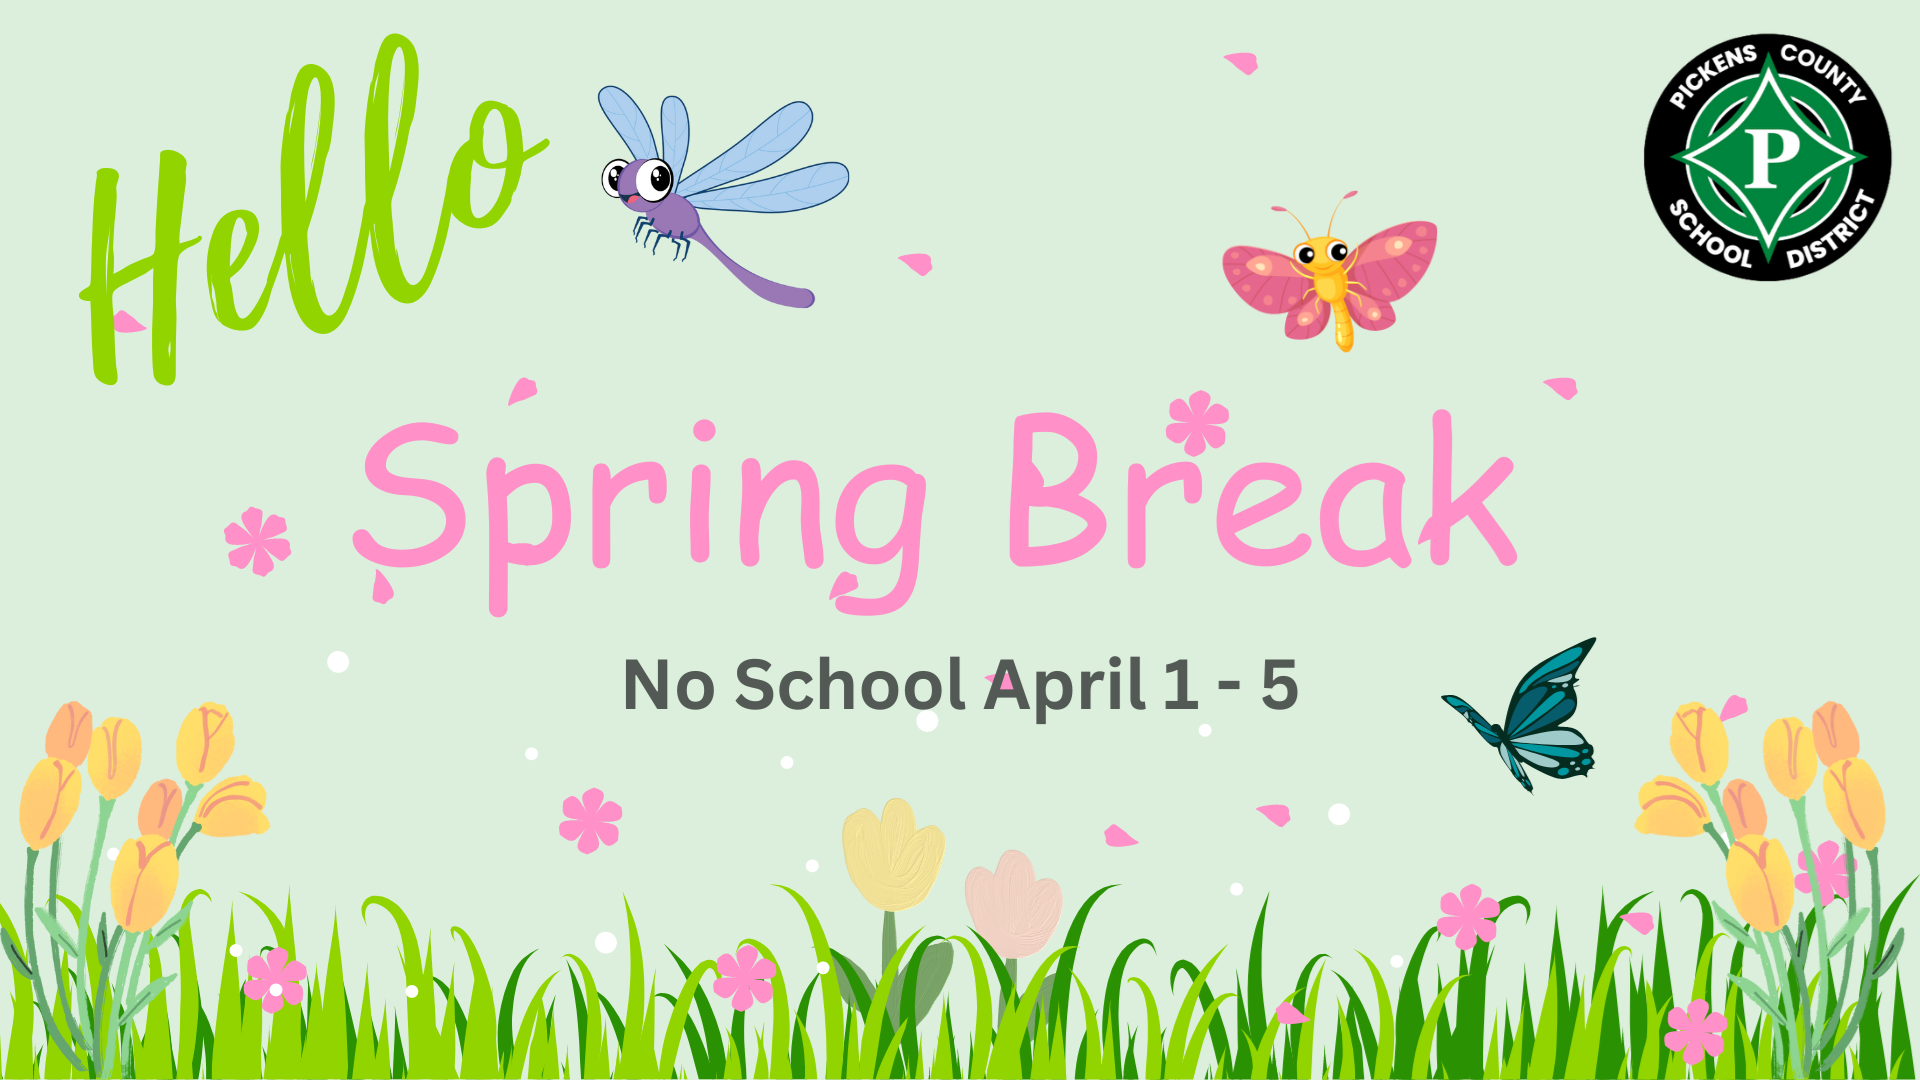 Spring Break is April 1st - 5th!